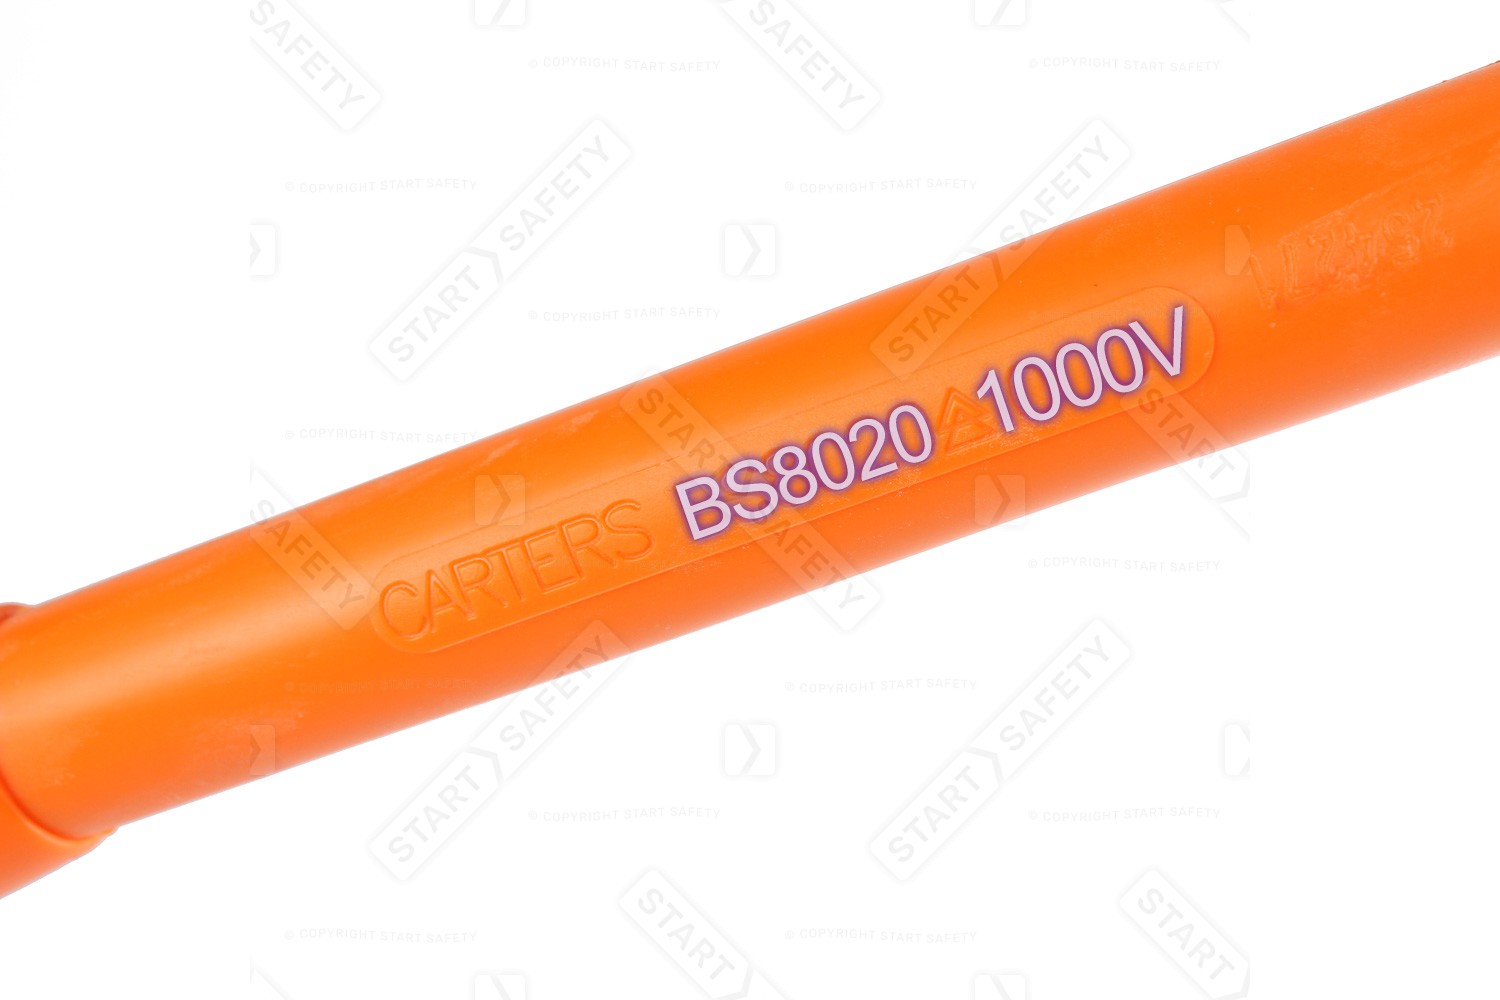 BS8020 compliant hand tool